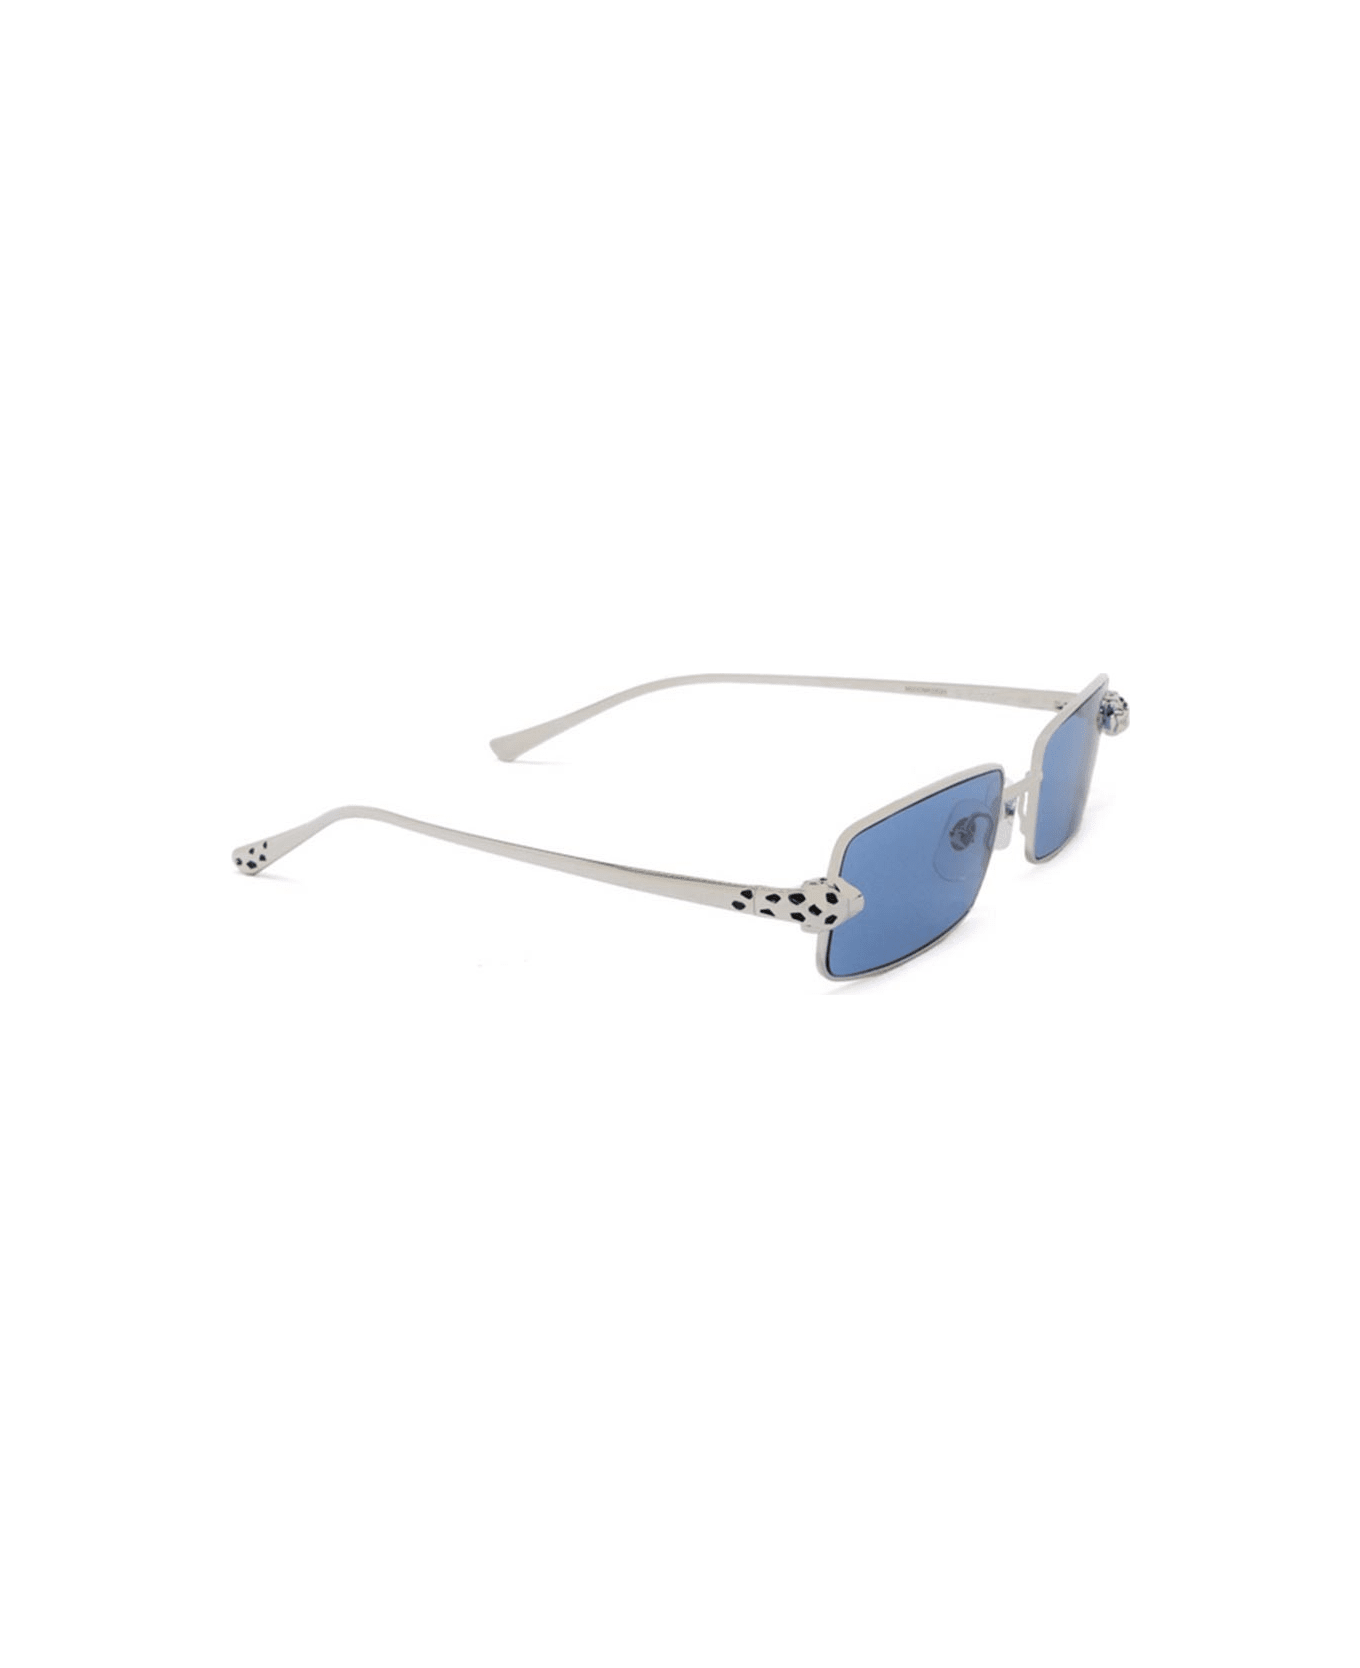 Cartier Eyewear Sunglasses - Silver/Blu